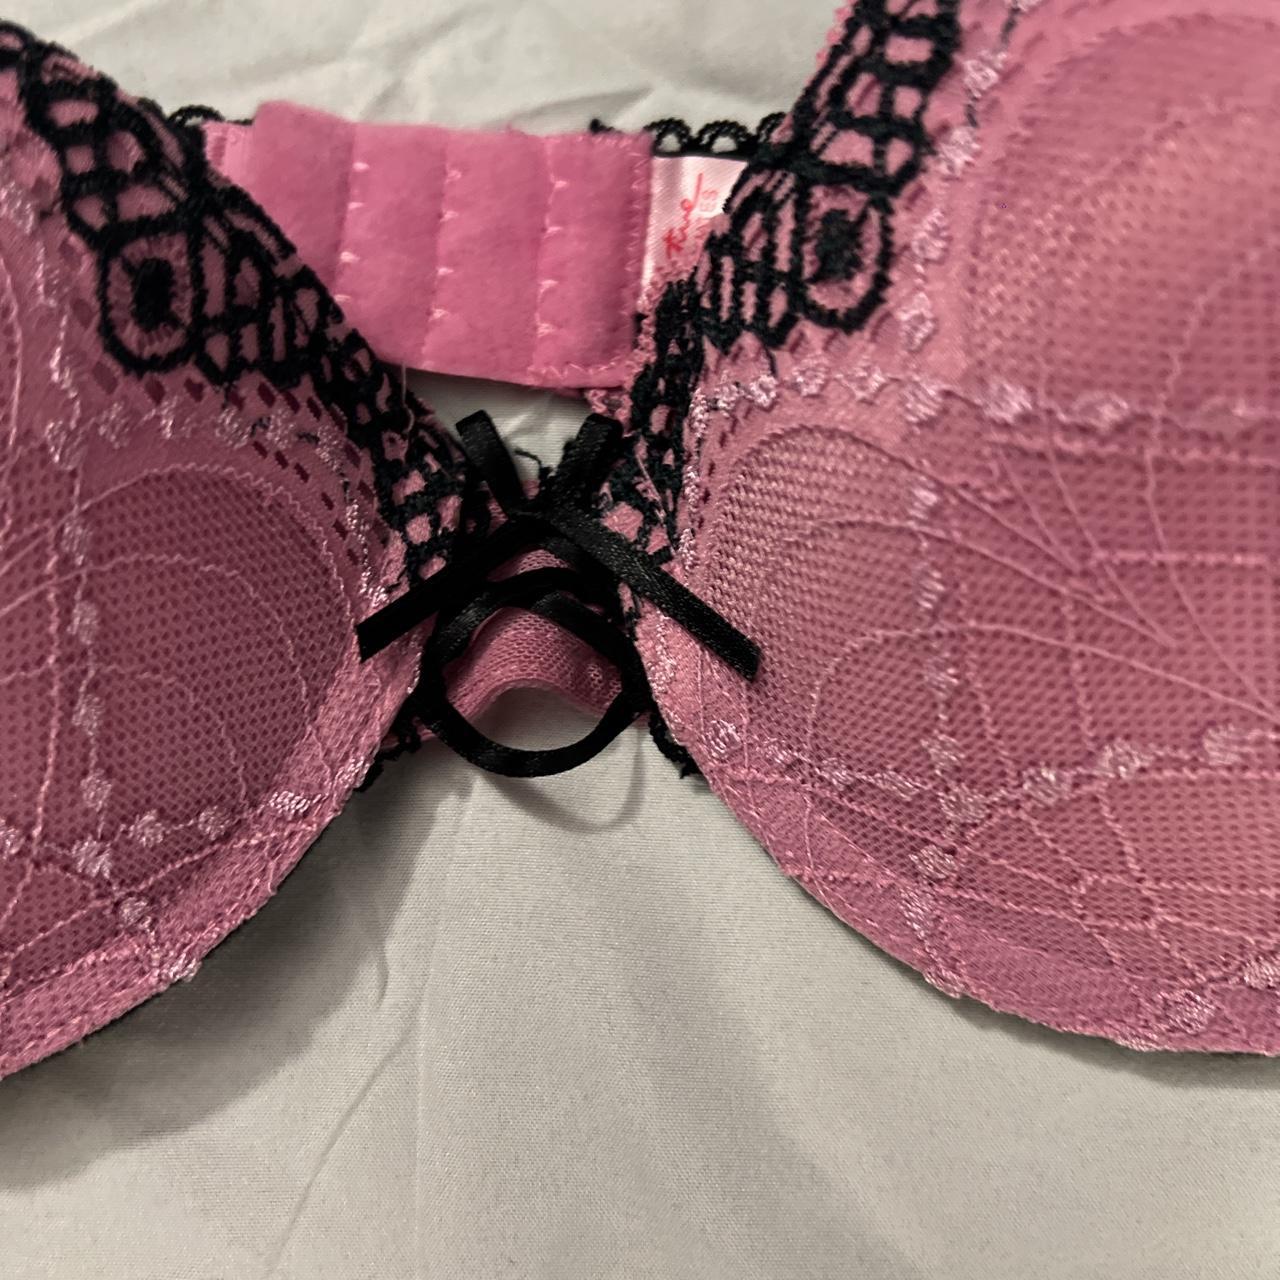 Hot pink bra size: 34B Never worn - Depop